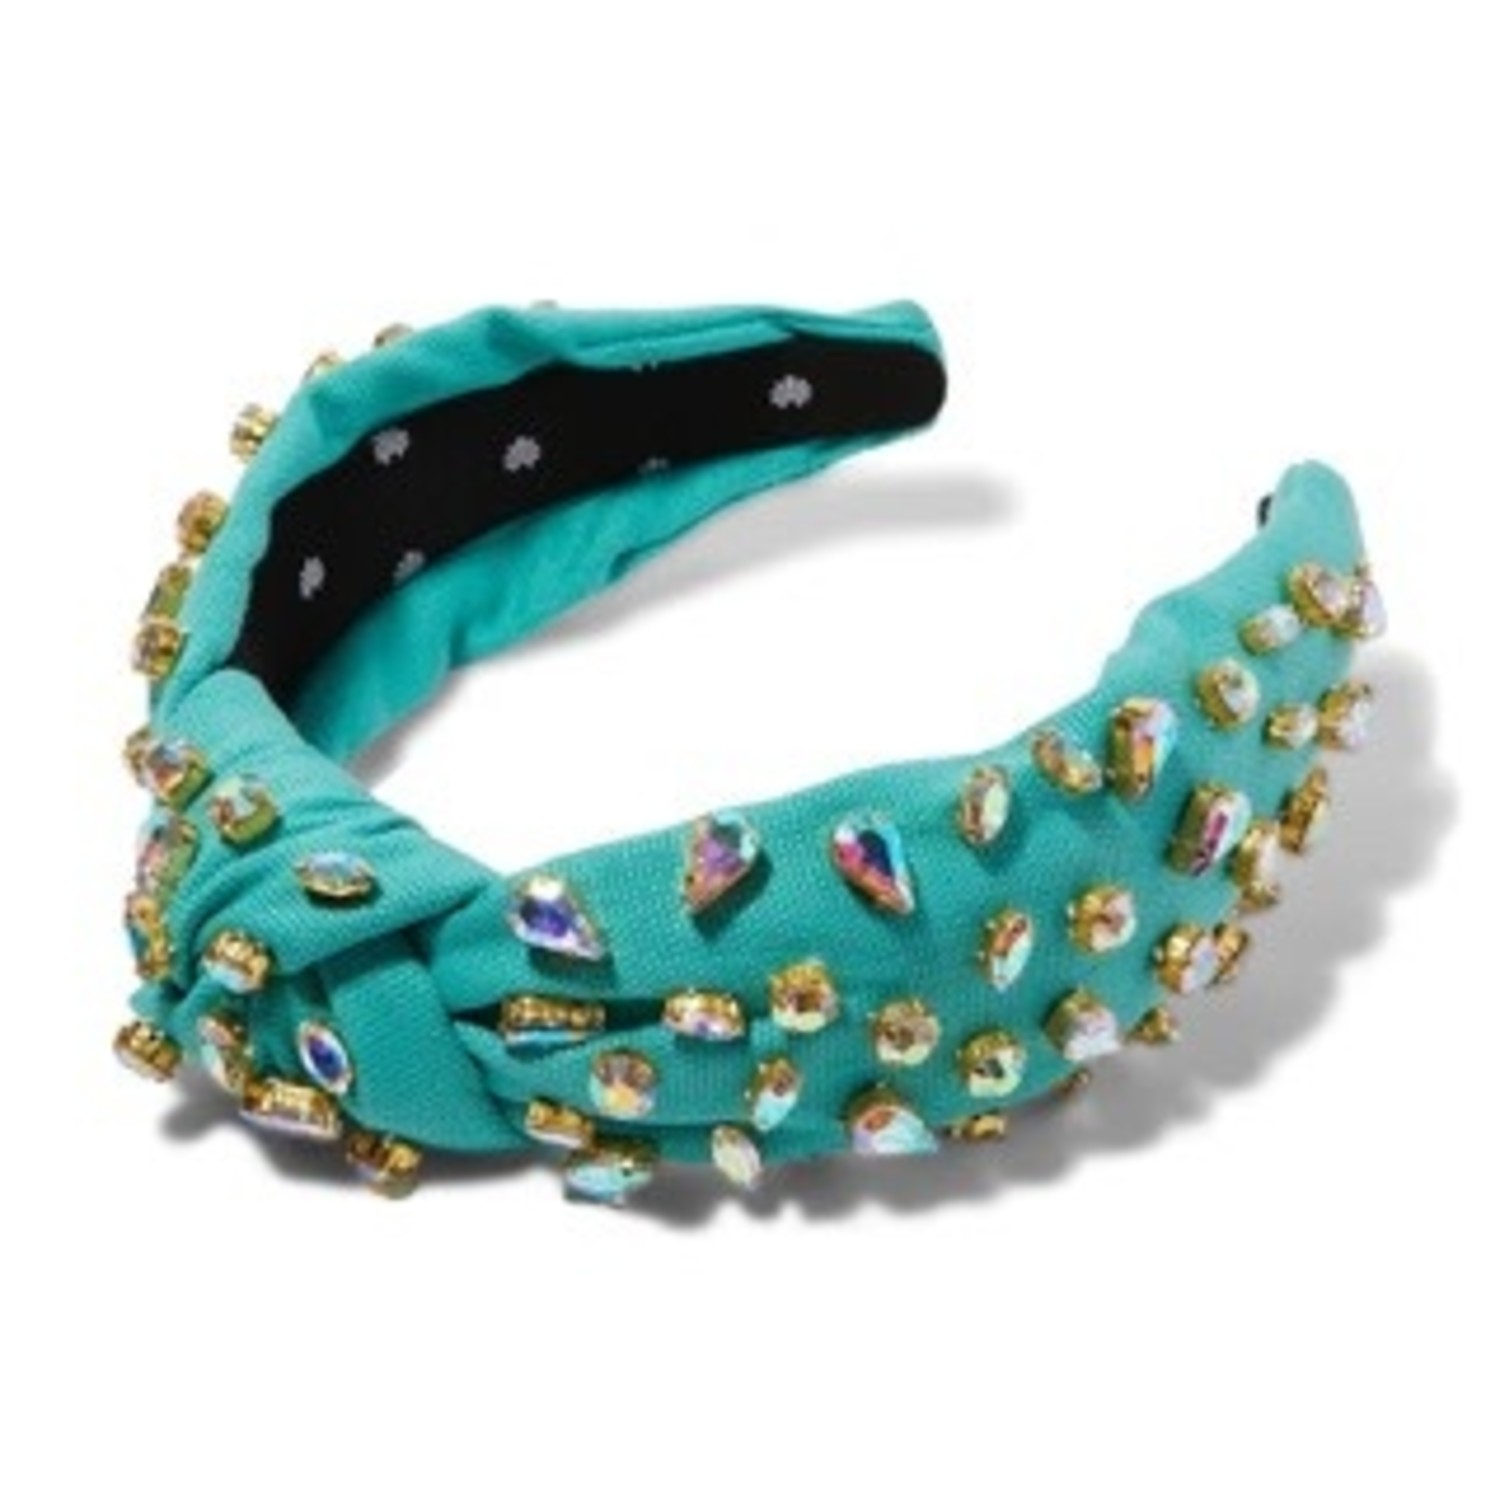 Candy Jeweled Knotted Headband Turquoise Rainbow - Southern Avenue Company